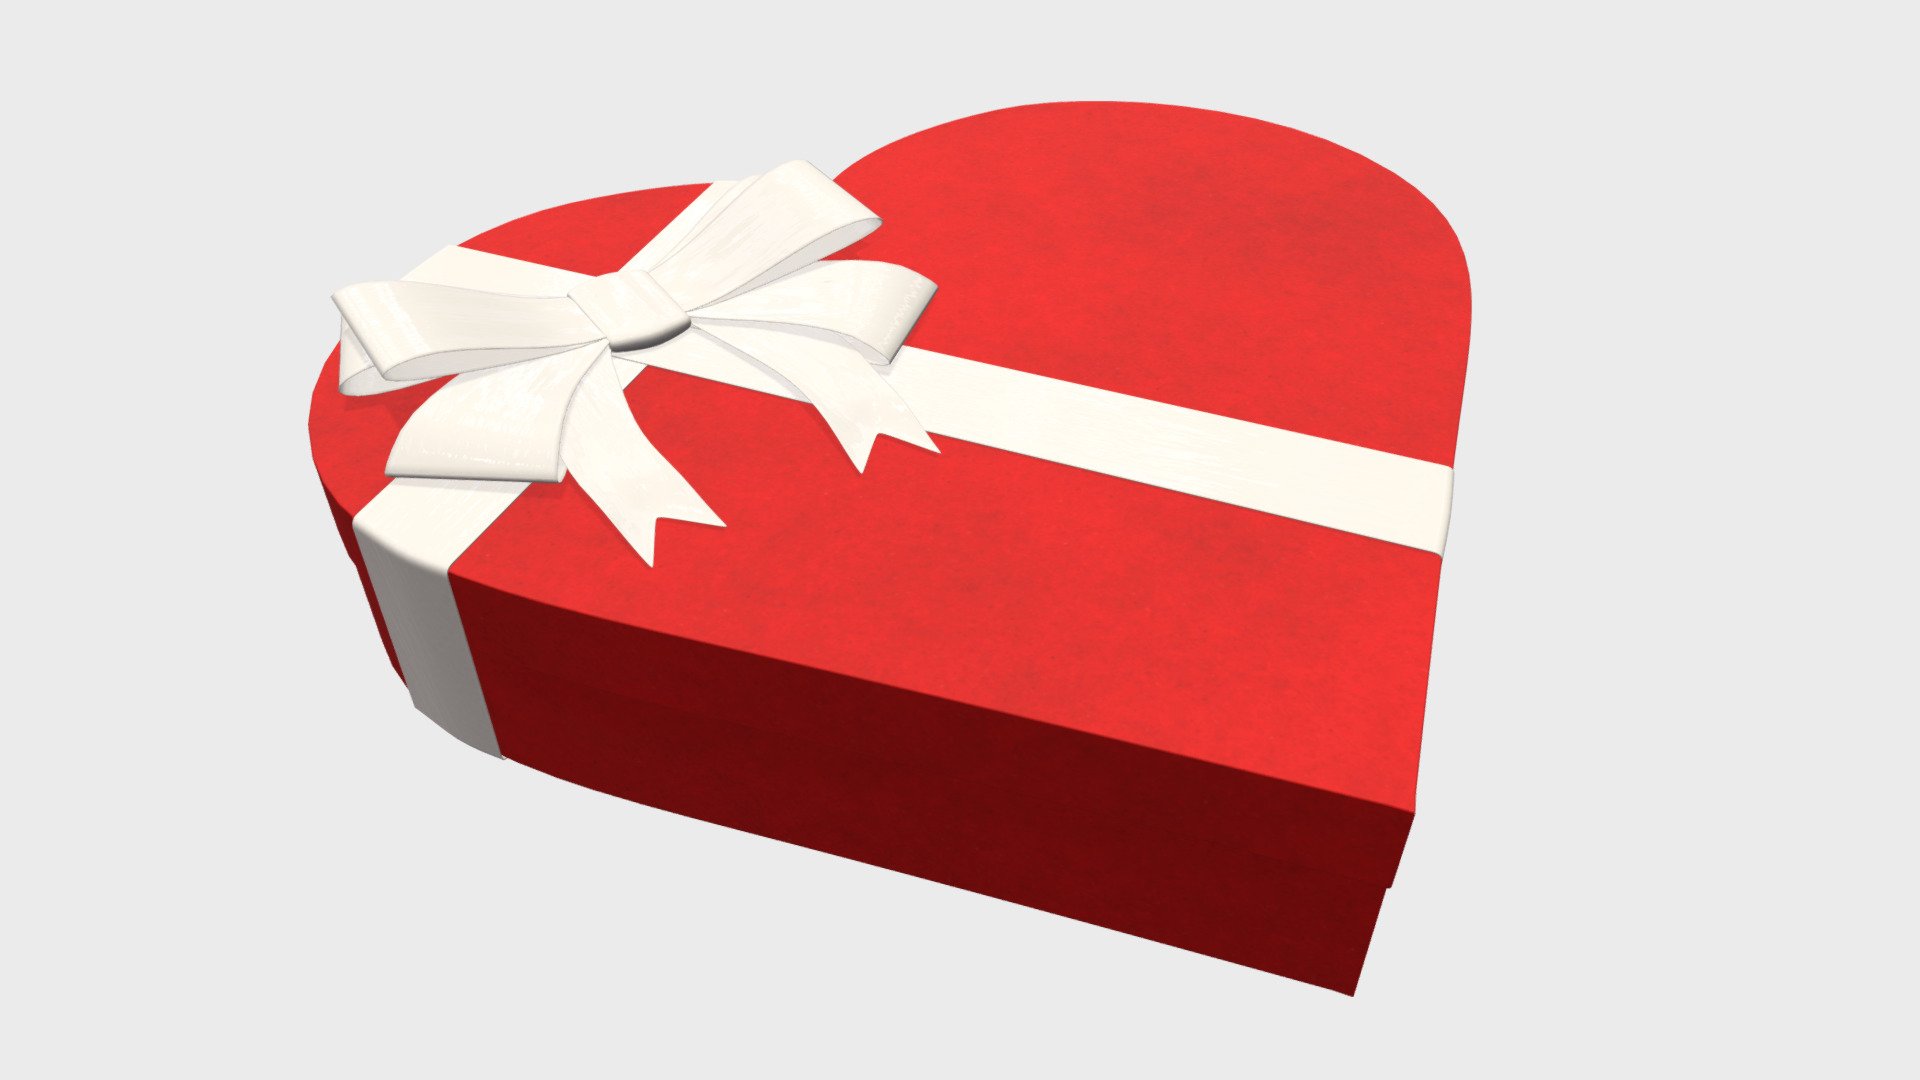 Closed heart gift box